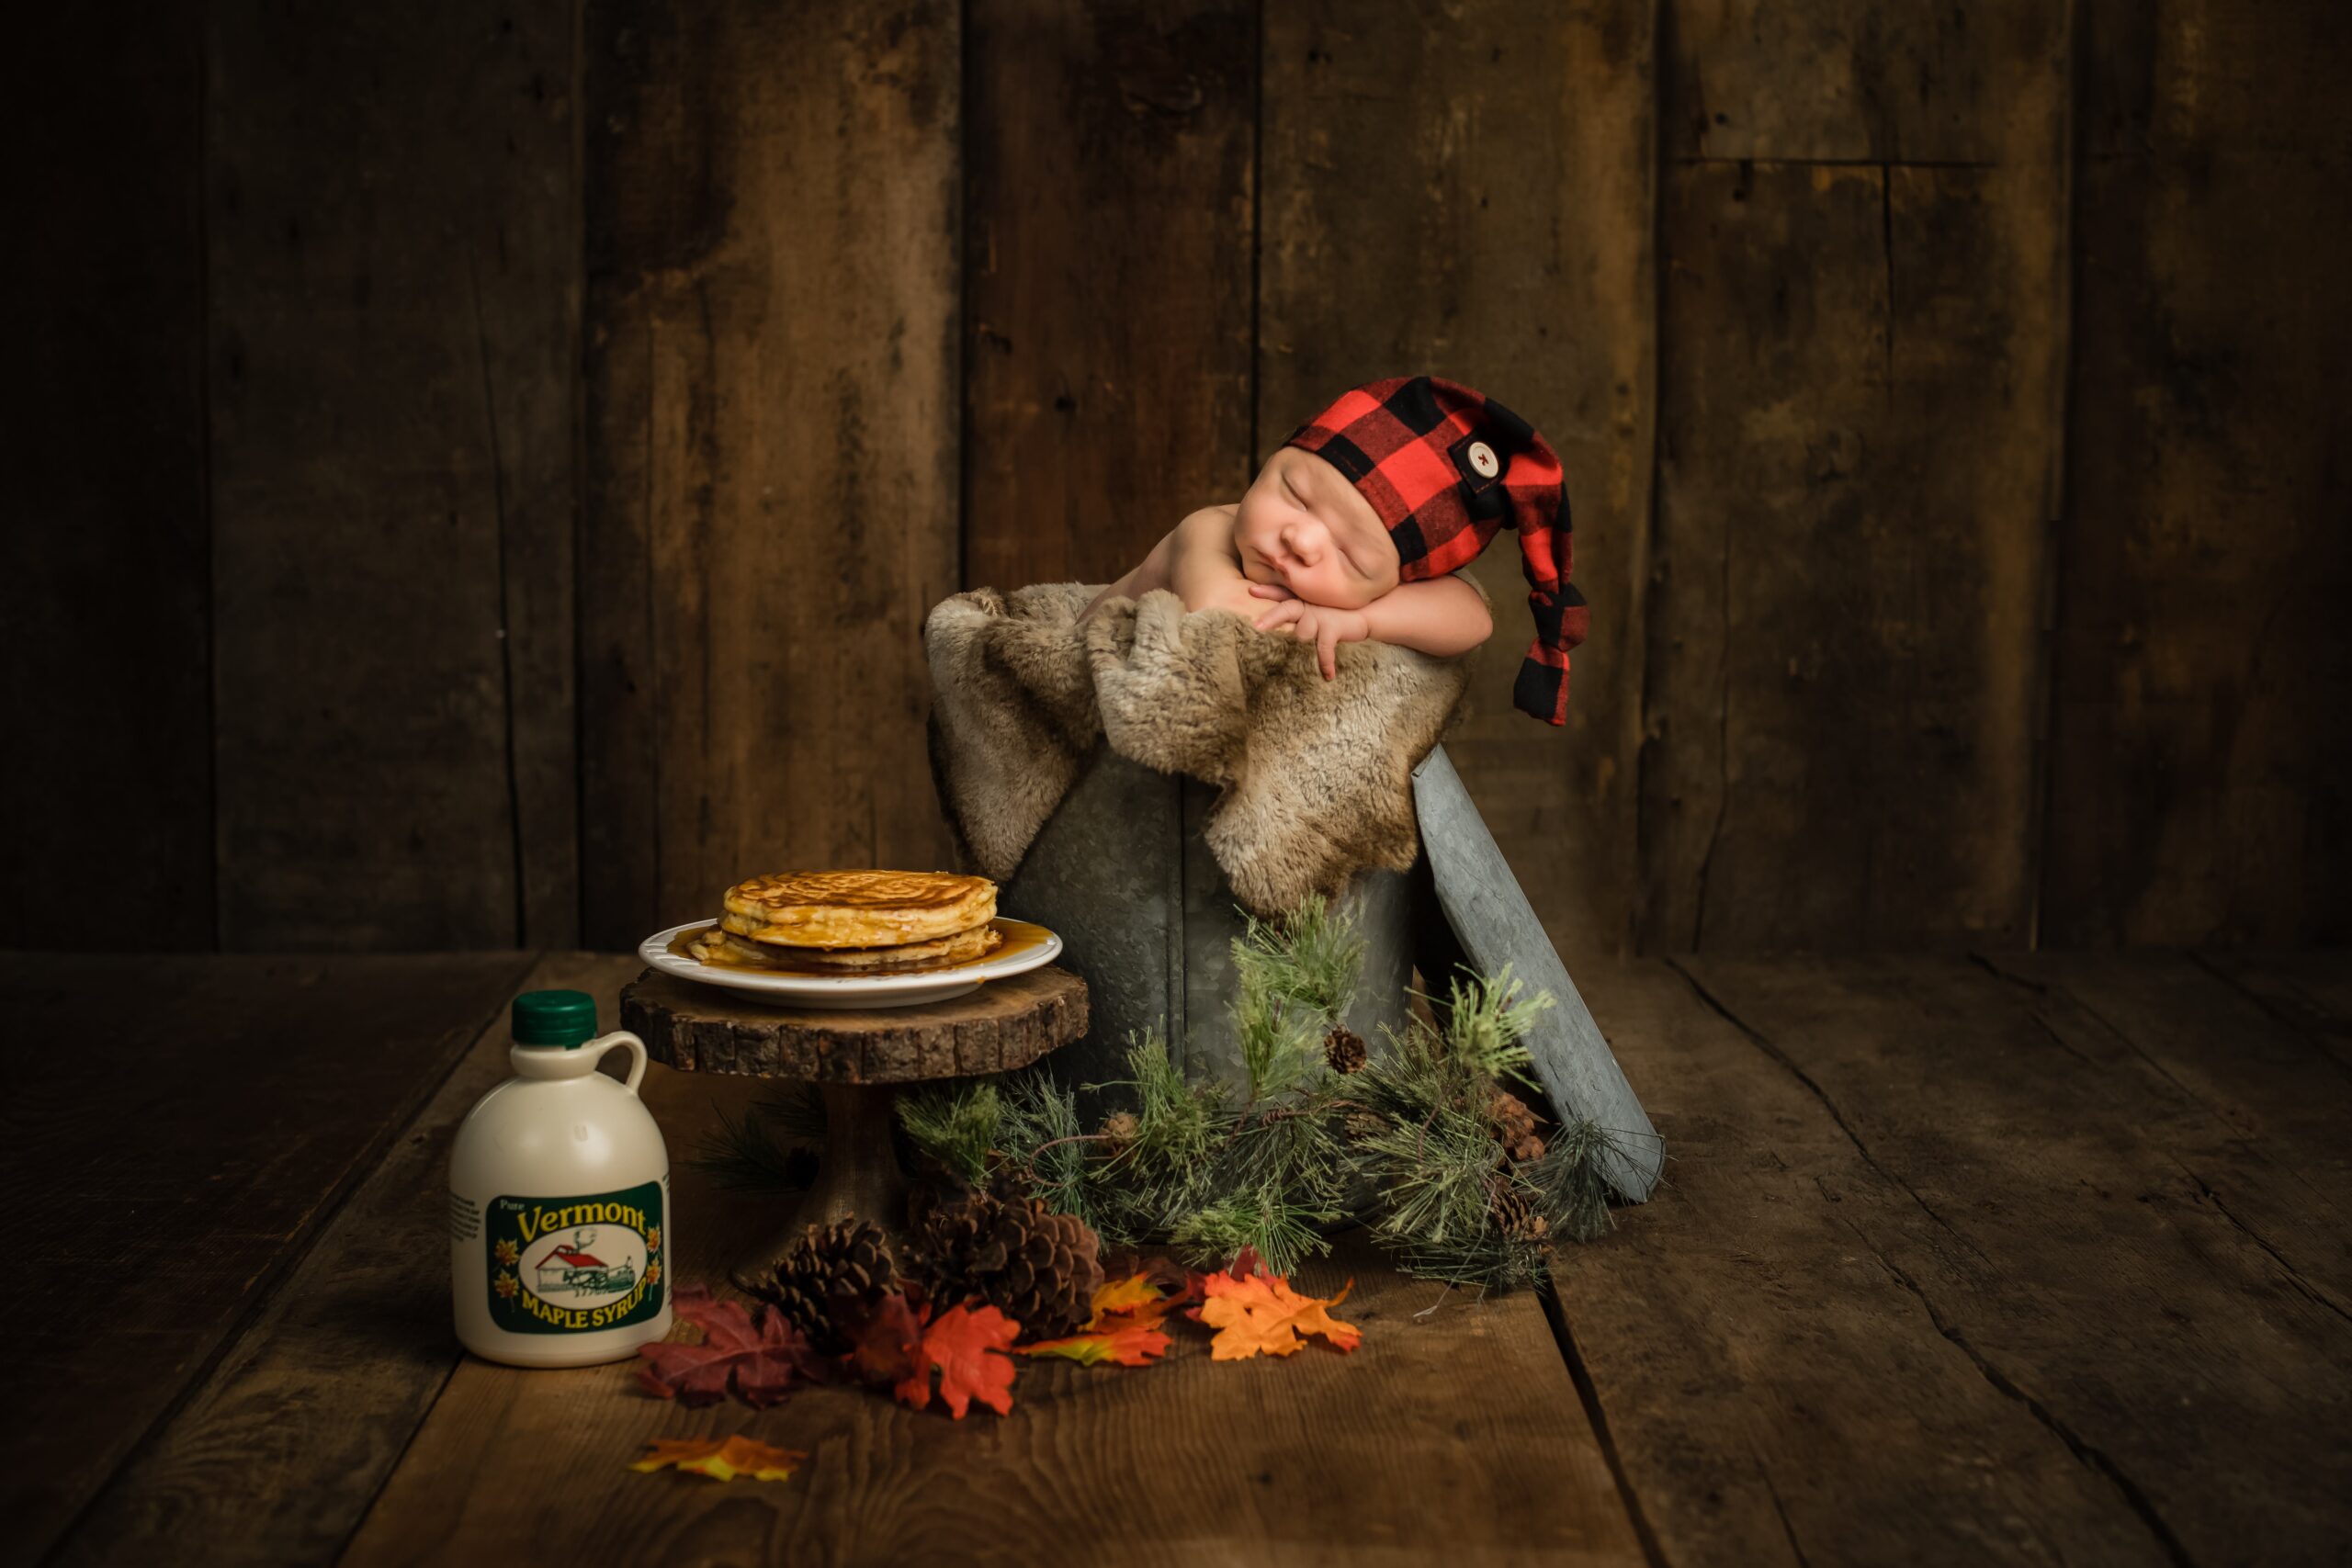 20210331  85S5805 Edit Edit 2 Edit scaled - Portfolio: Infant Photography